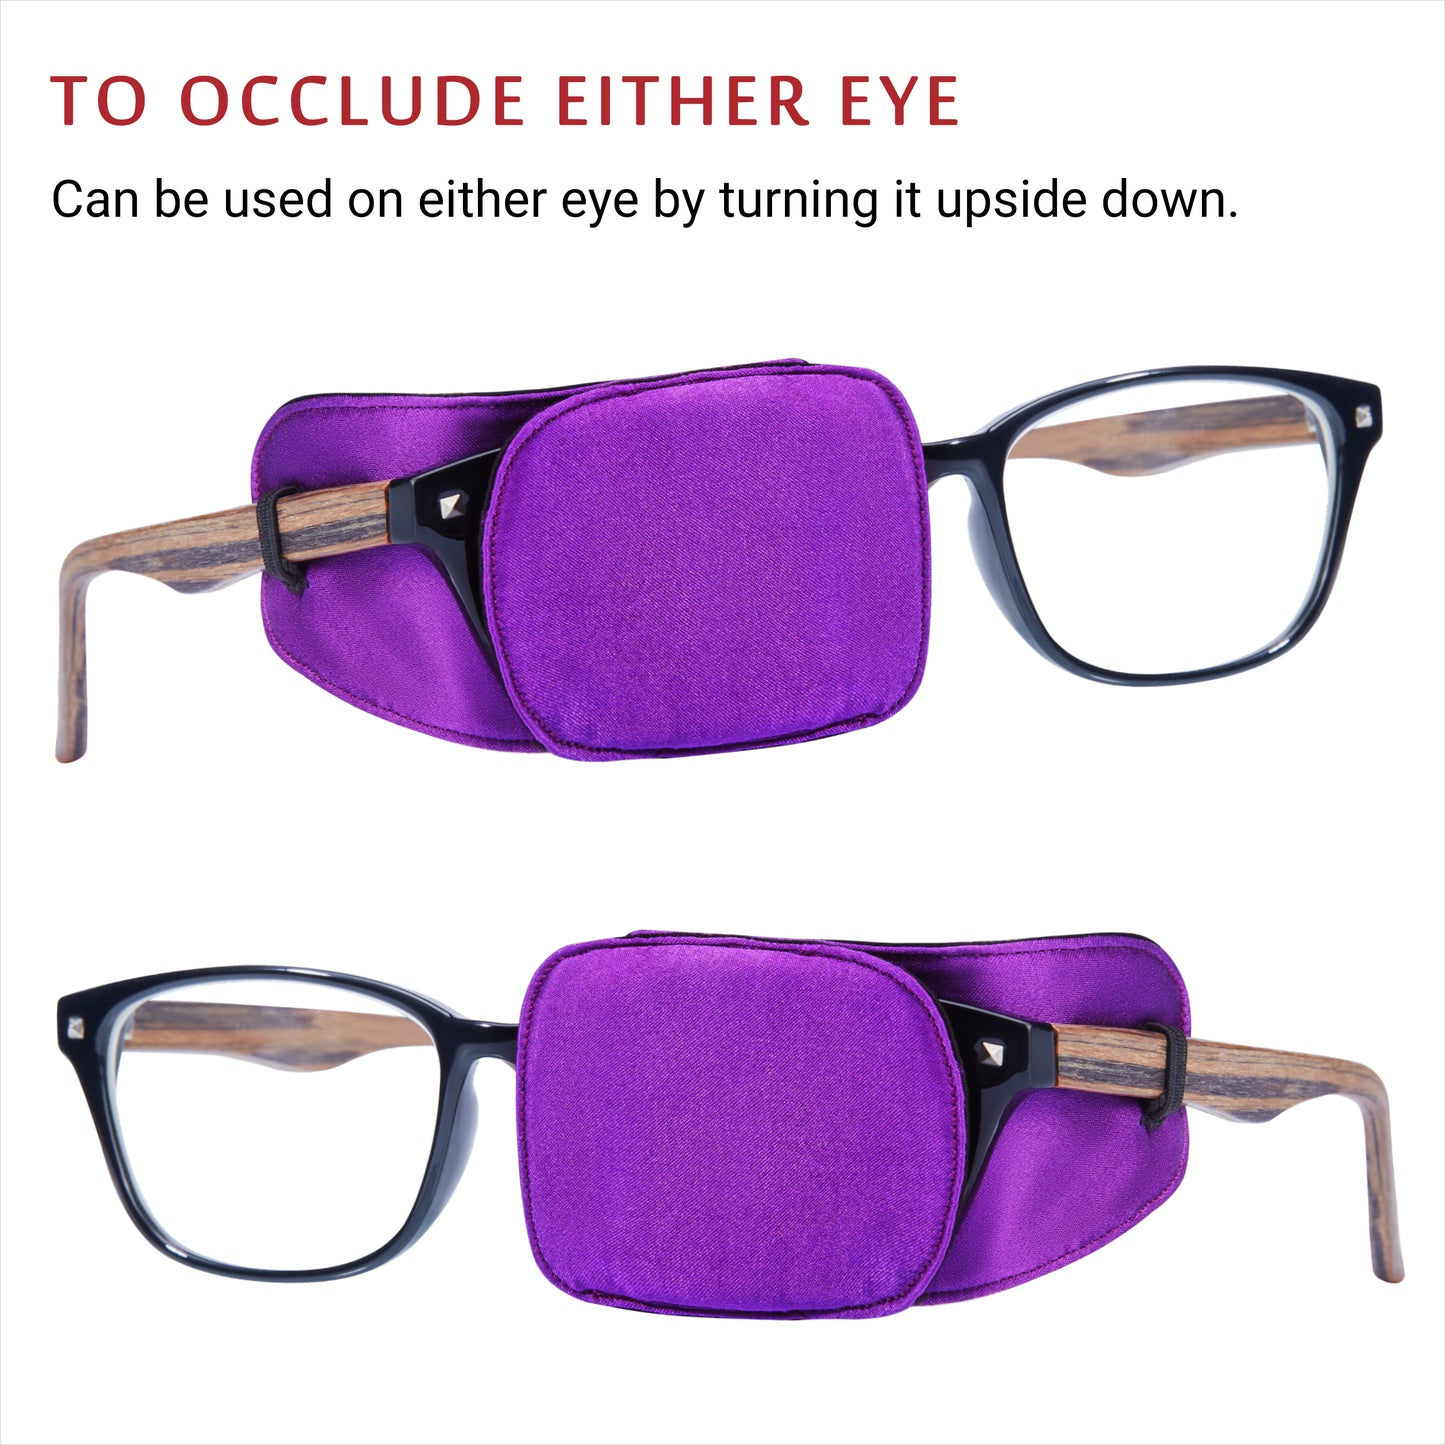 Silk Eye Patch for Glasses (Medium, Bright Violet)